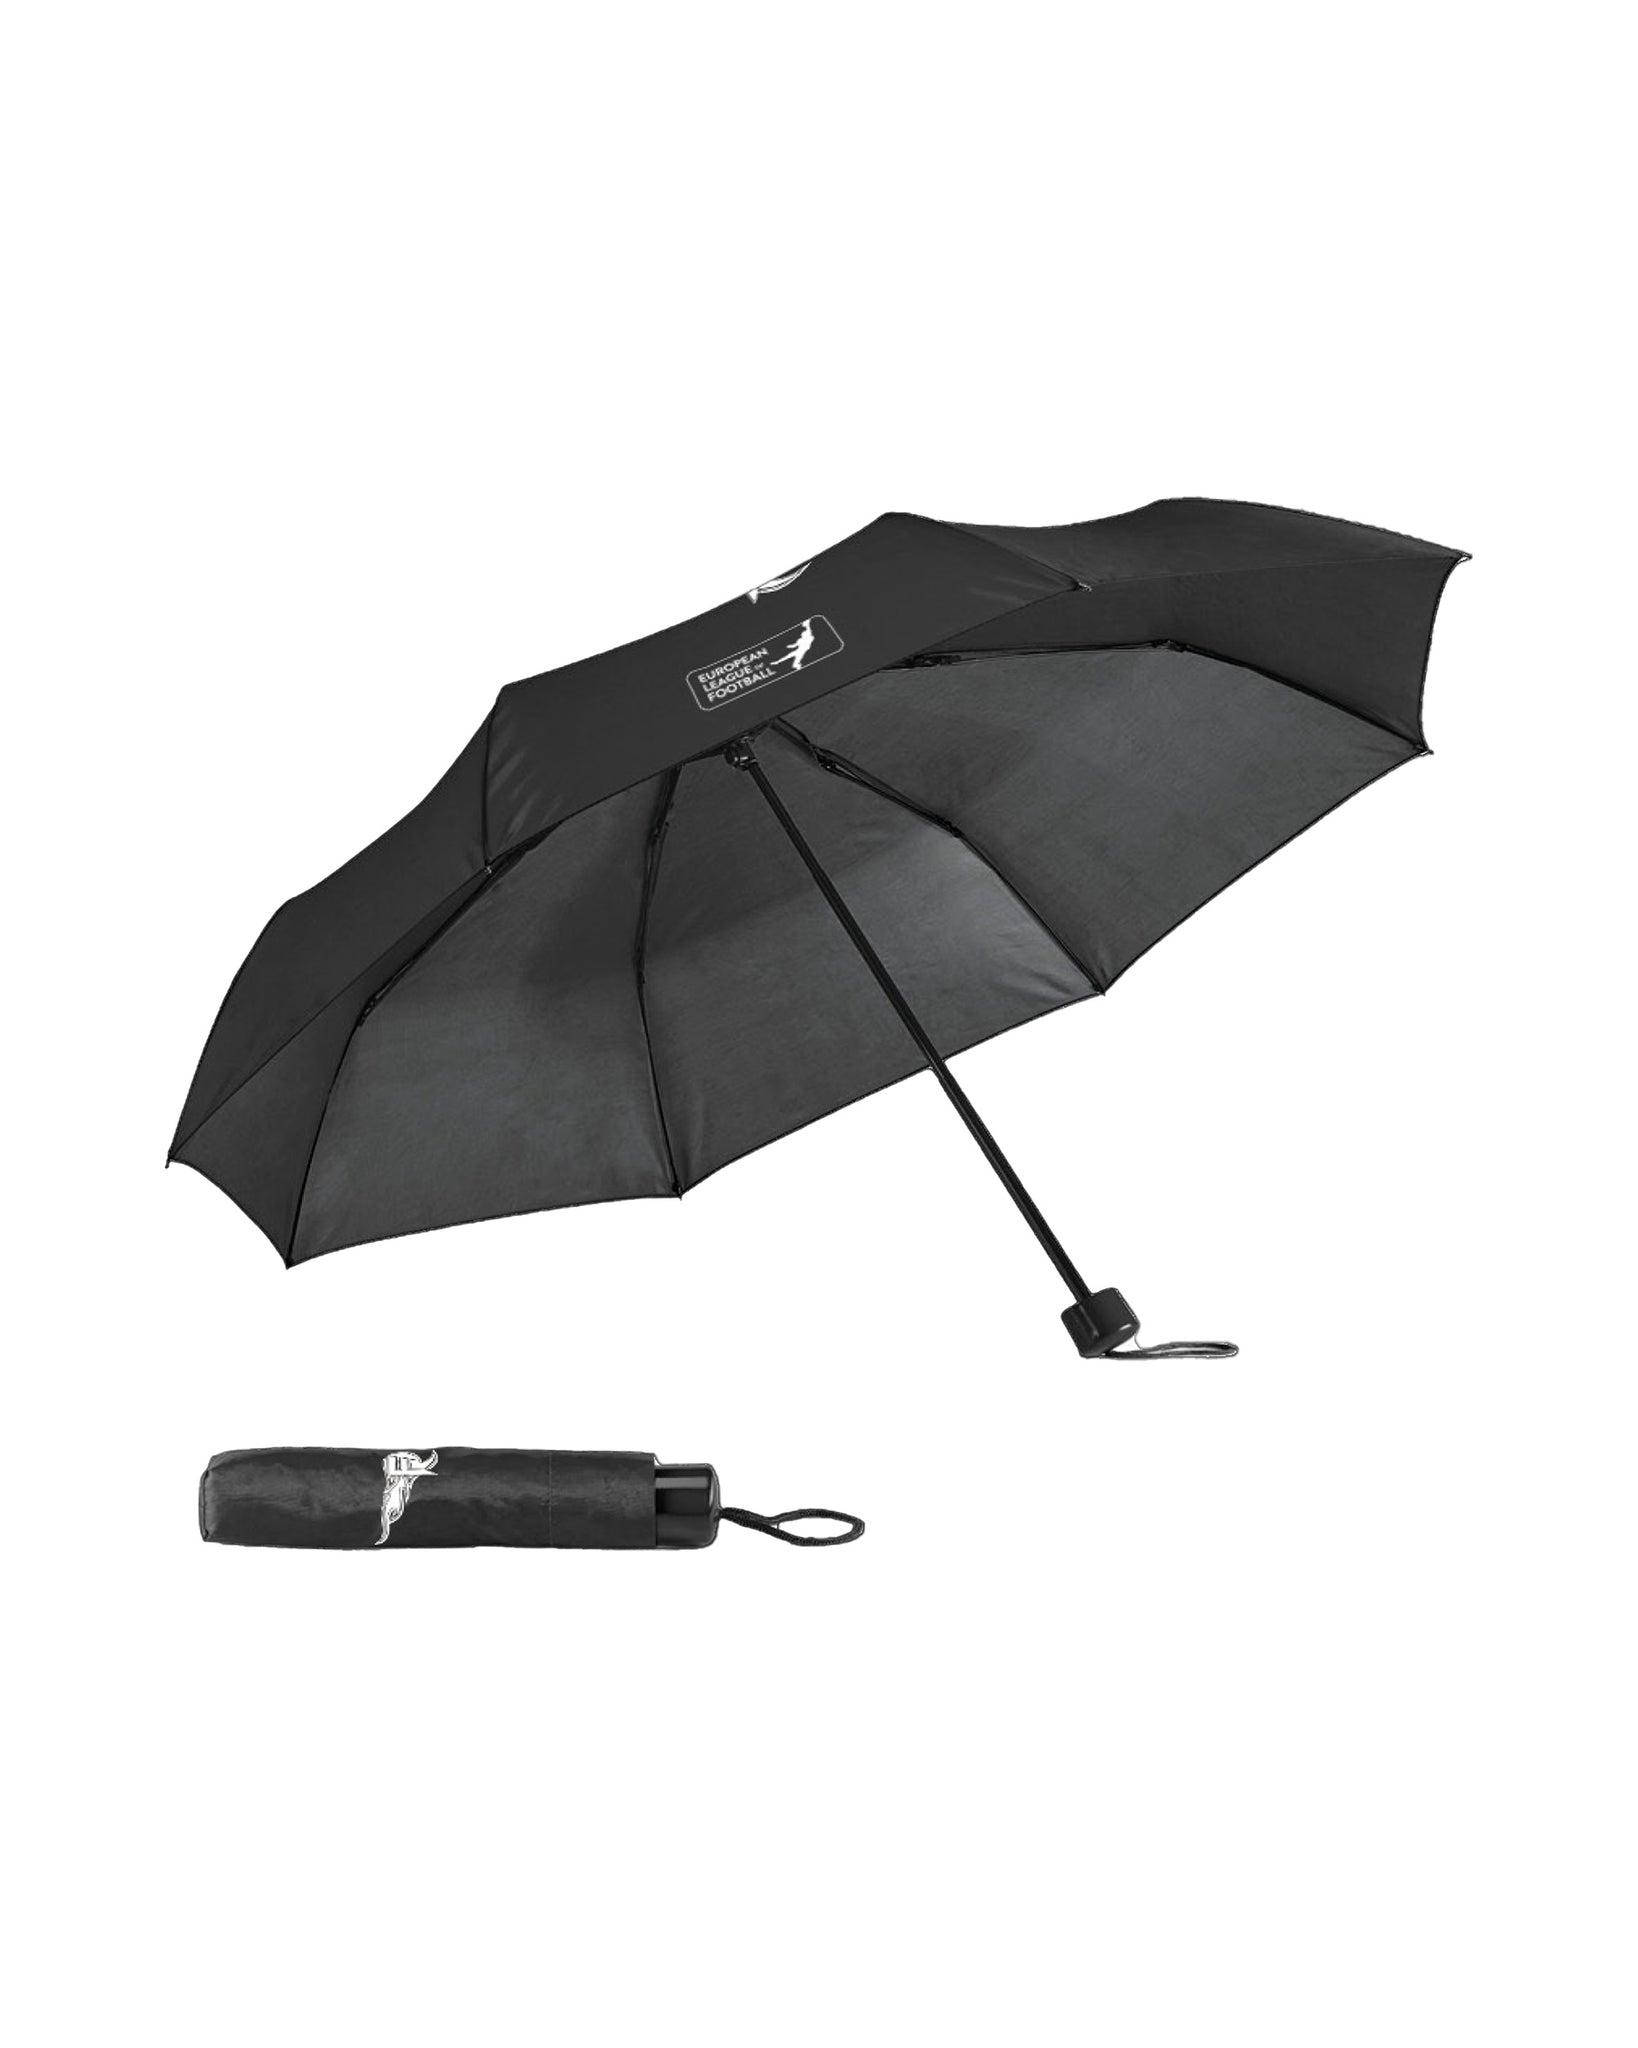 Rhein Fire Umbrella